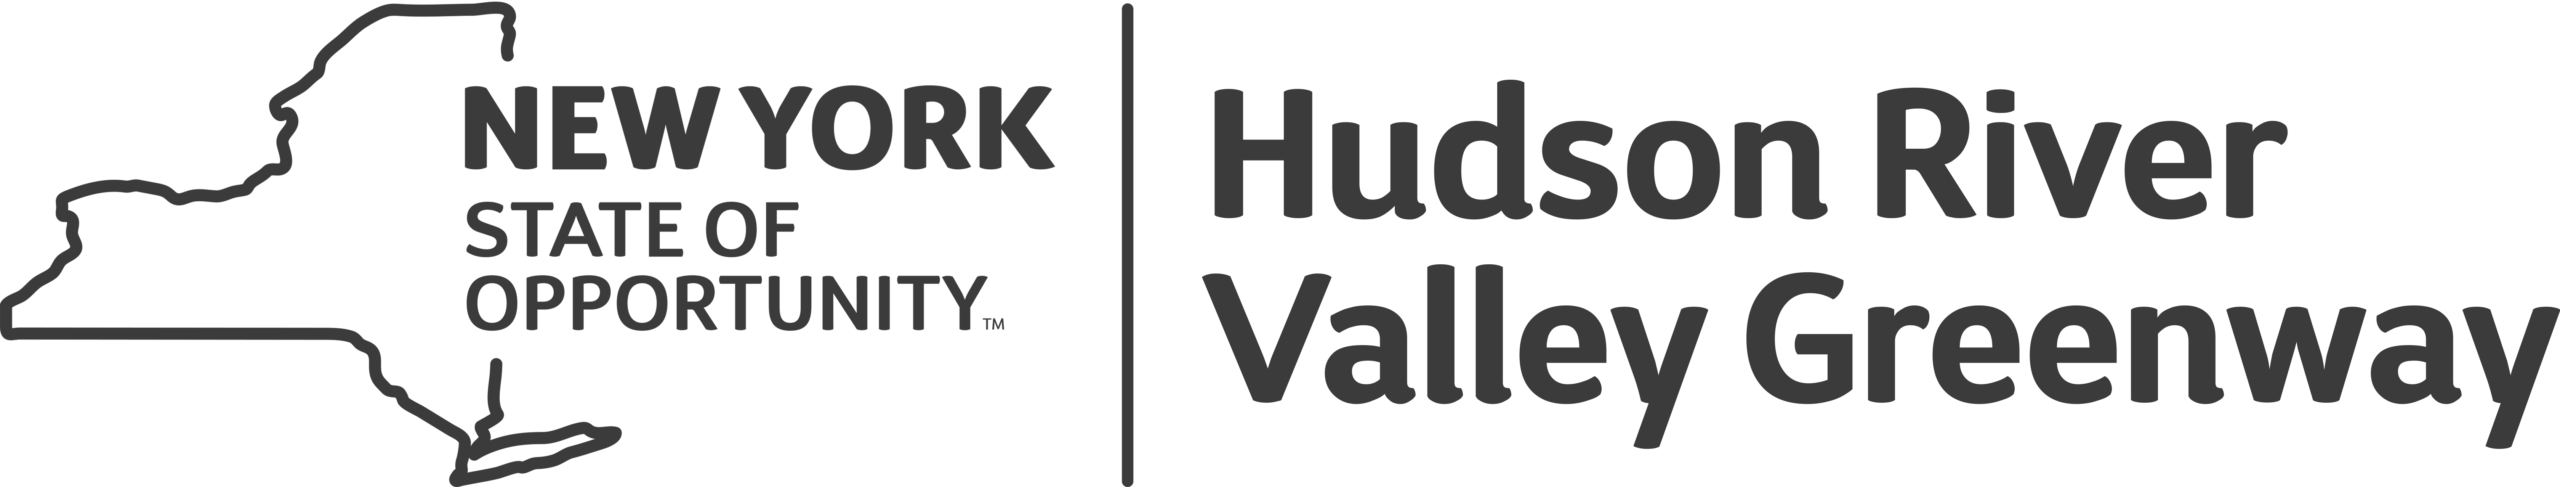 Hudson River Valley Greenway logo